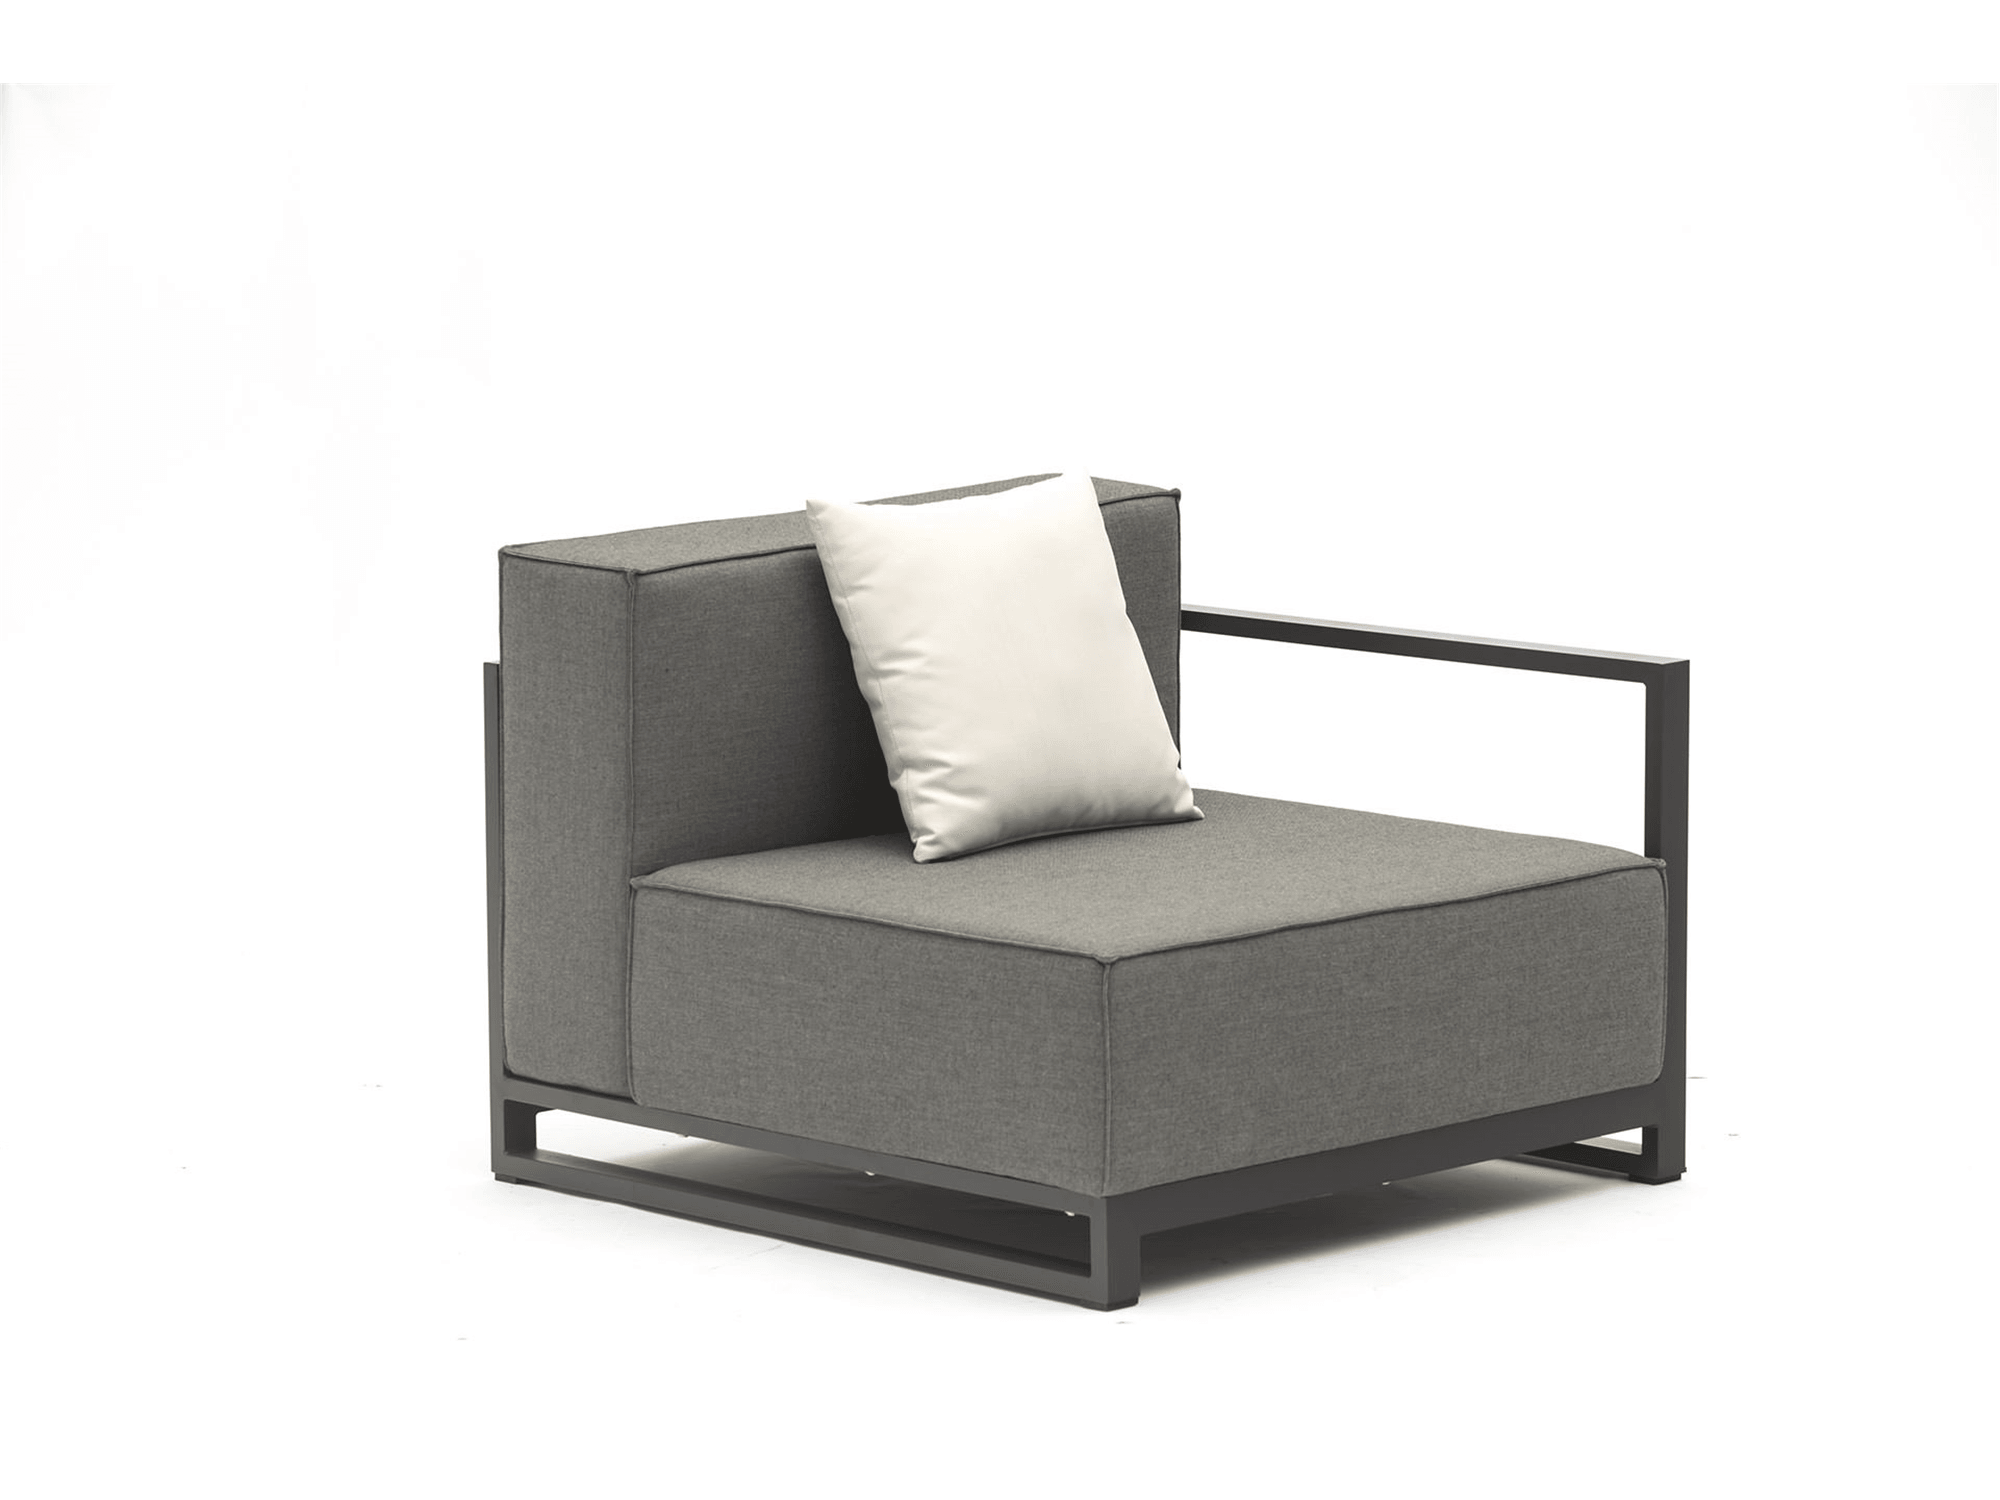 Lizbeth Indoor/Outdoor Modular Sofa - Euro Living Furniture